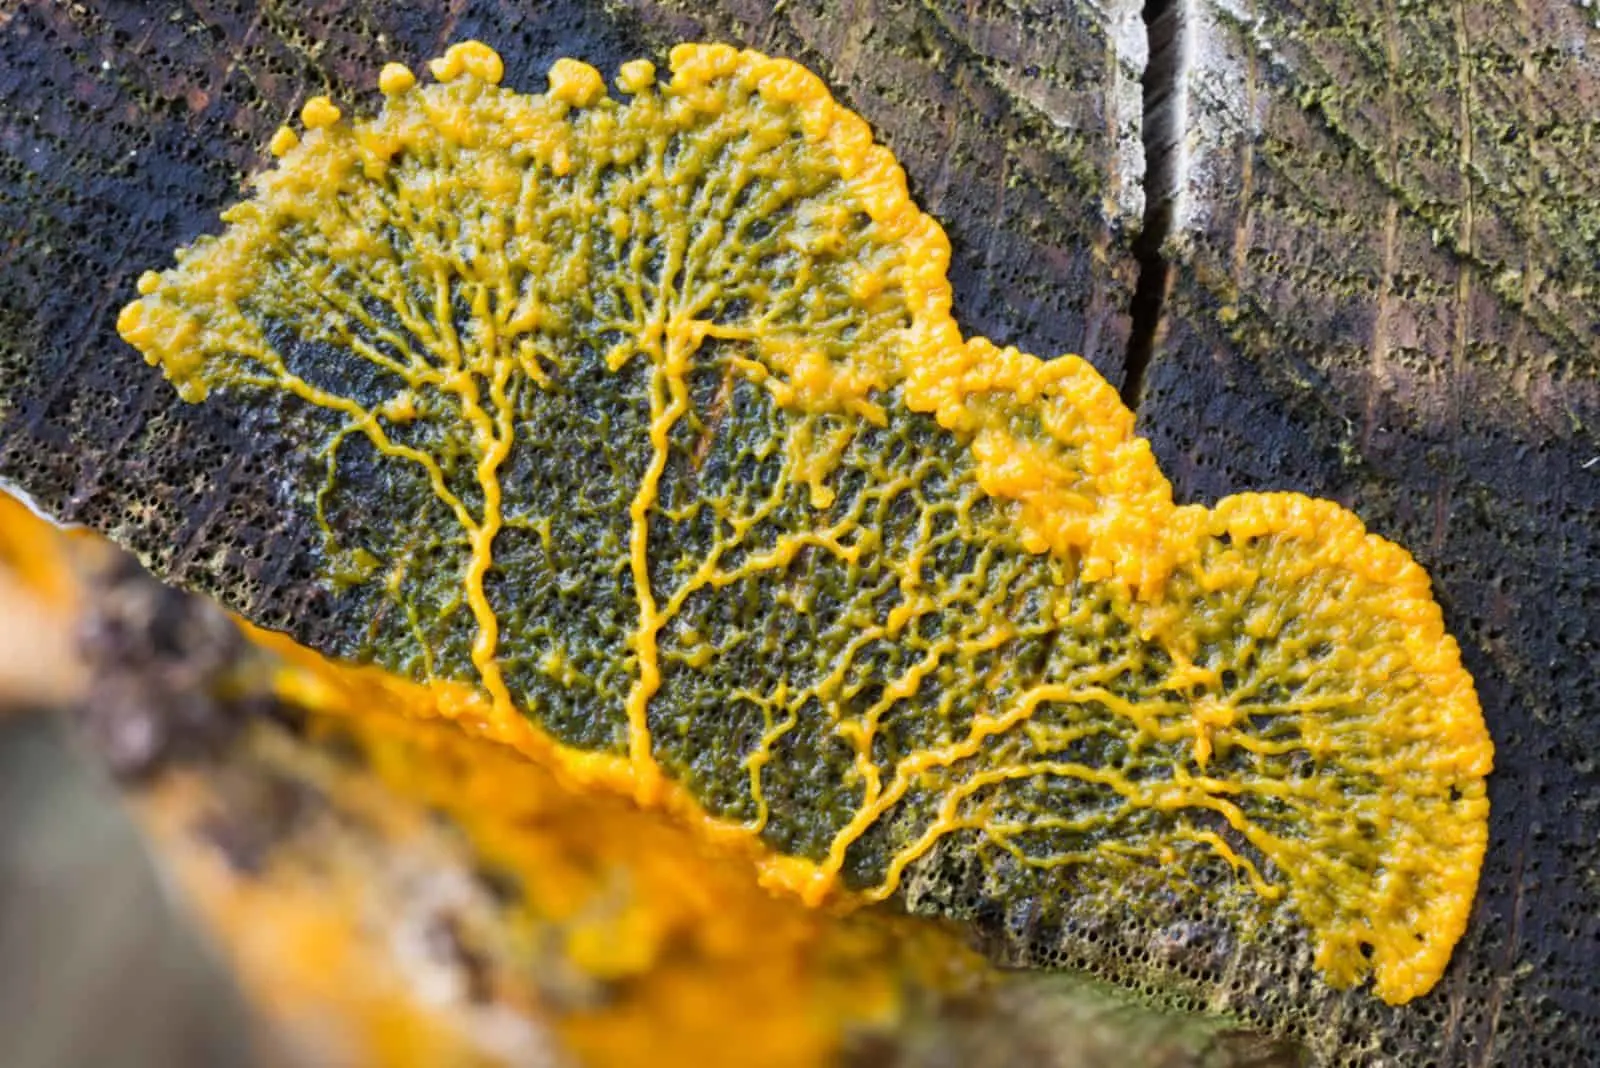 Migrating plasmodium of Badhamia utricularis slime mold on a tree trunk